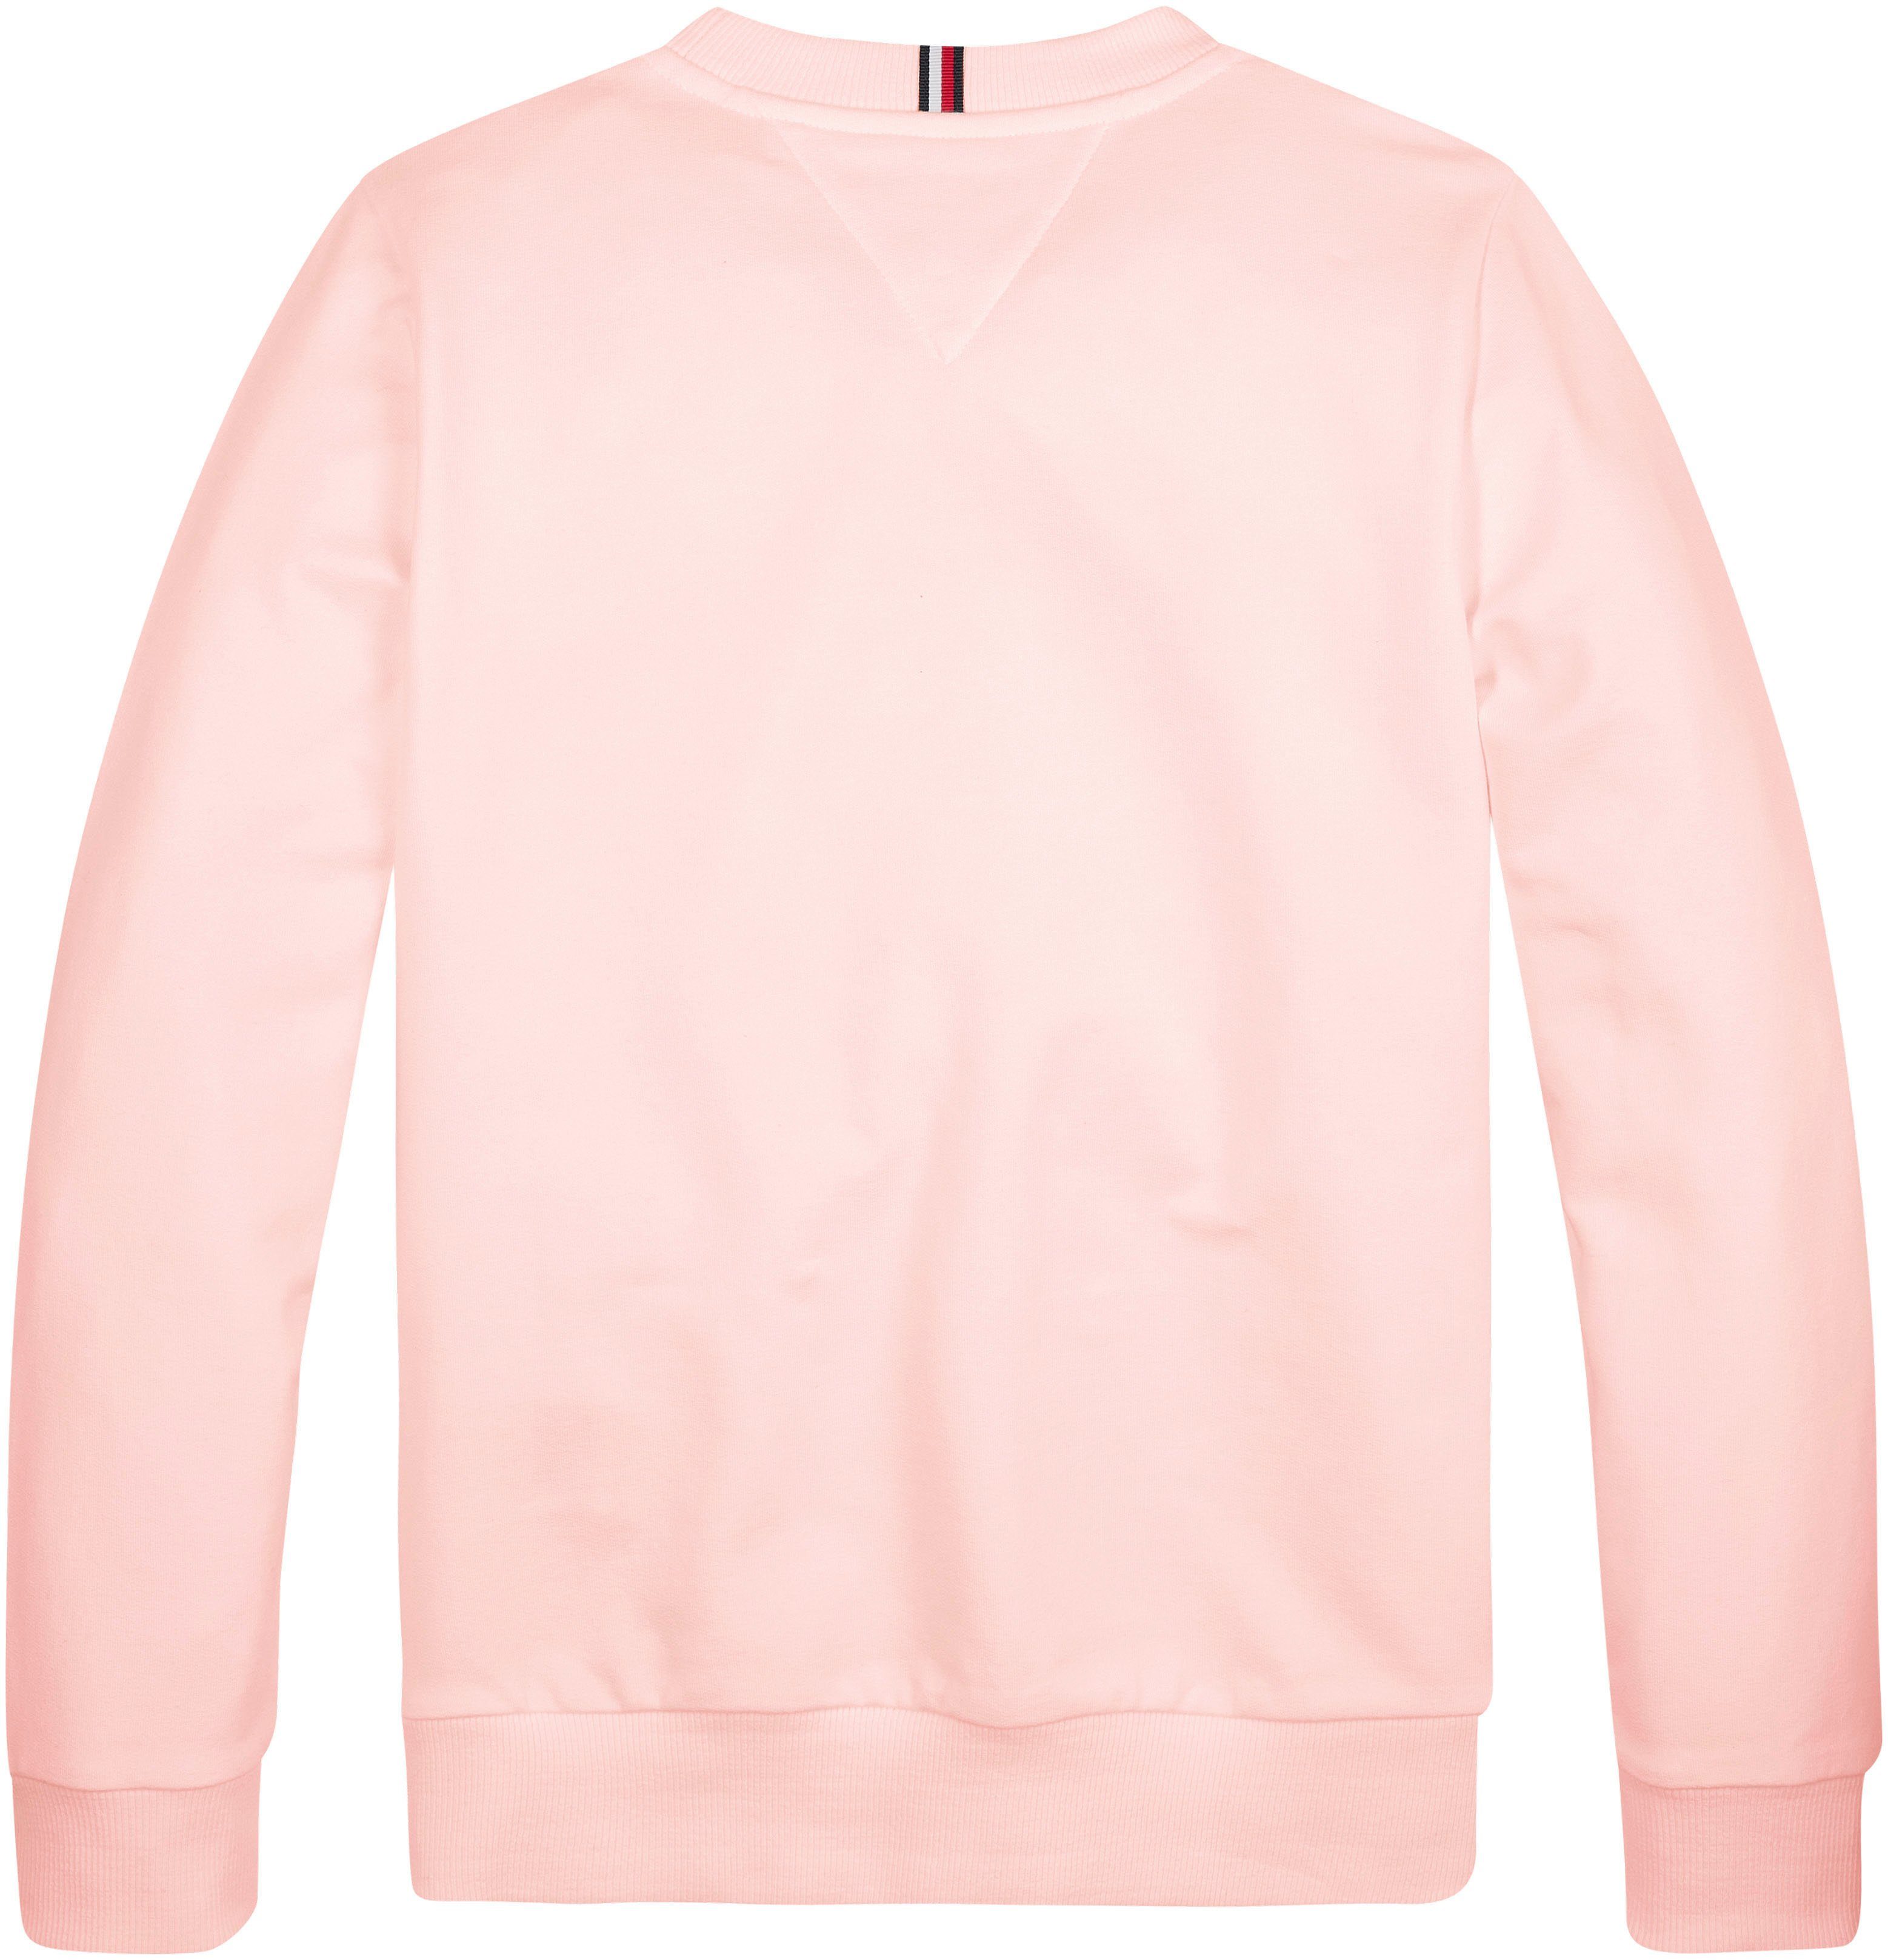 Hilfger SWEATSHIRT Tommy Hilfiger Sweatshirt Pink_Crystal mit SOLID Logo-Flag Tommy